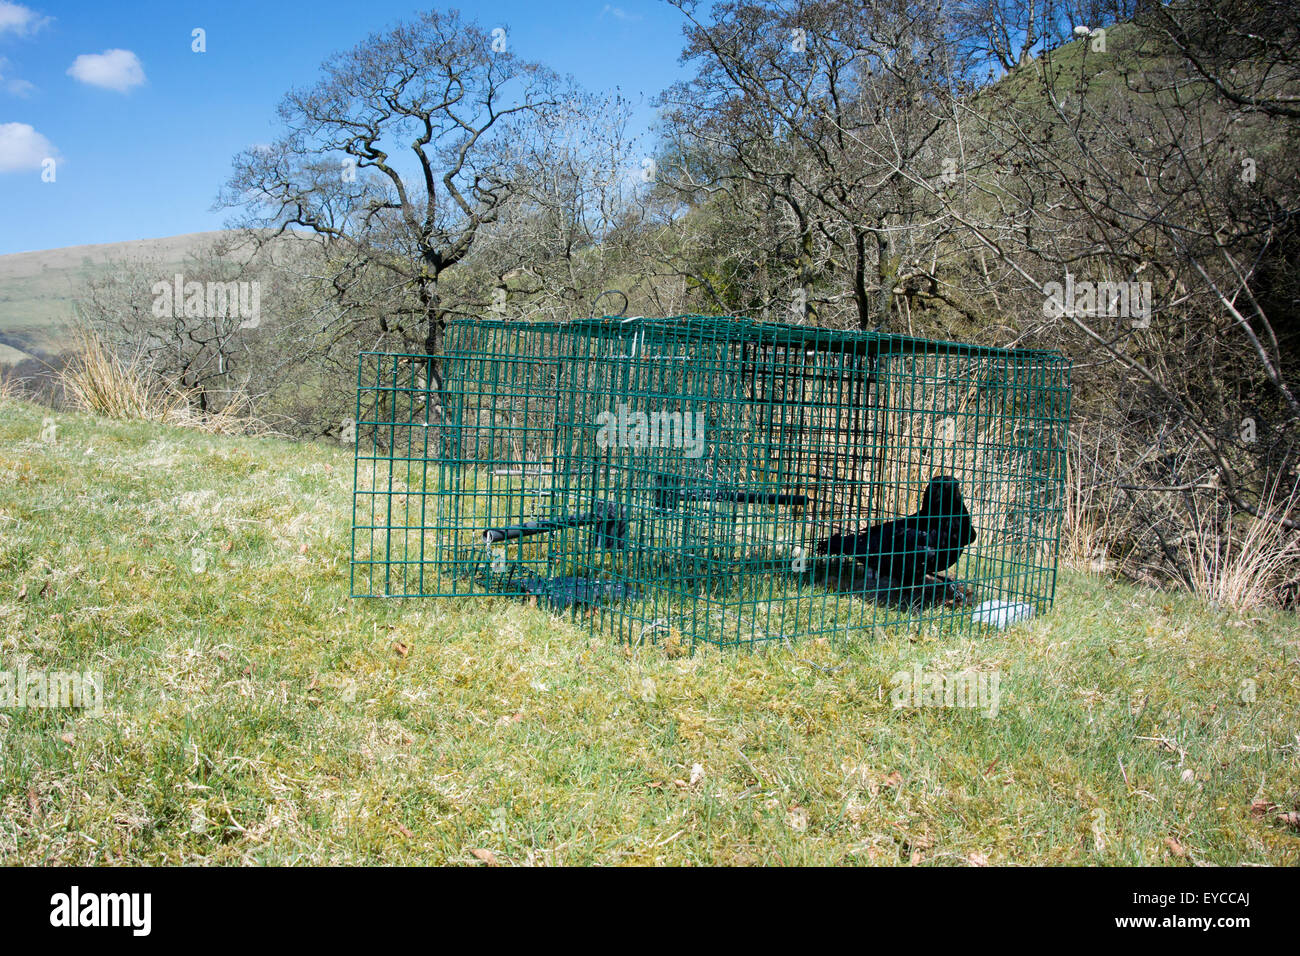 AAS-Krähe in Larsen Falle, zur Kontrolle der Krähe Bevölkerung in Landschaft. Cumbria, UK. Stockfoto